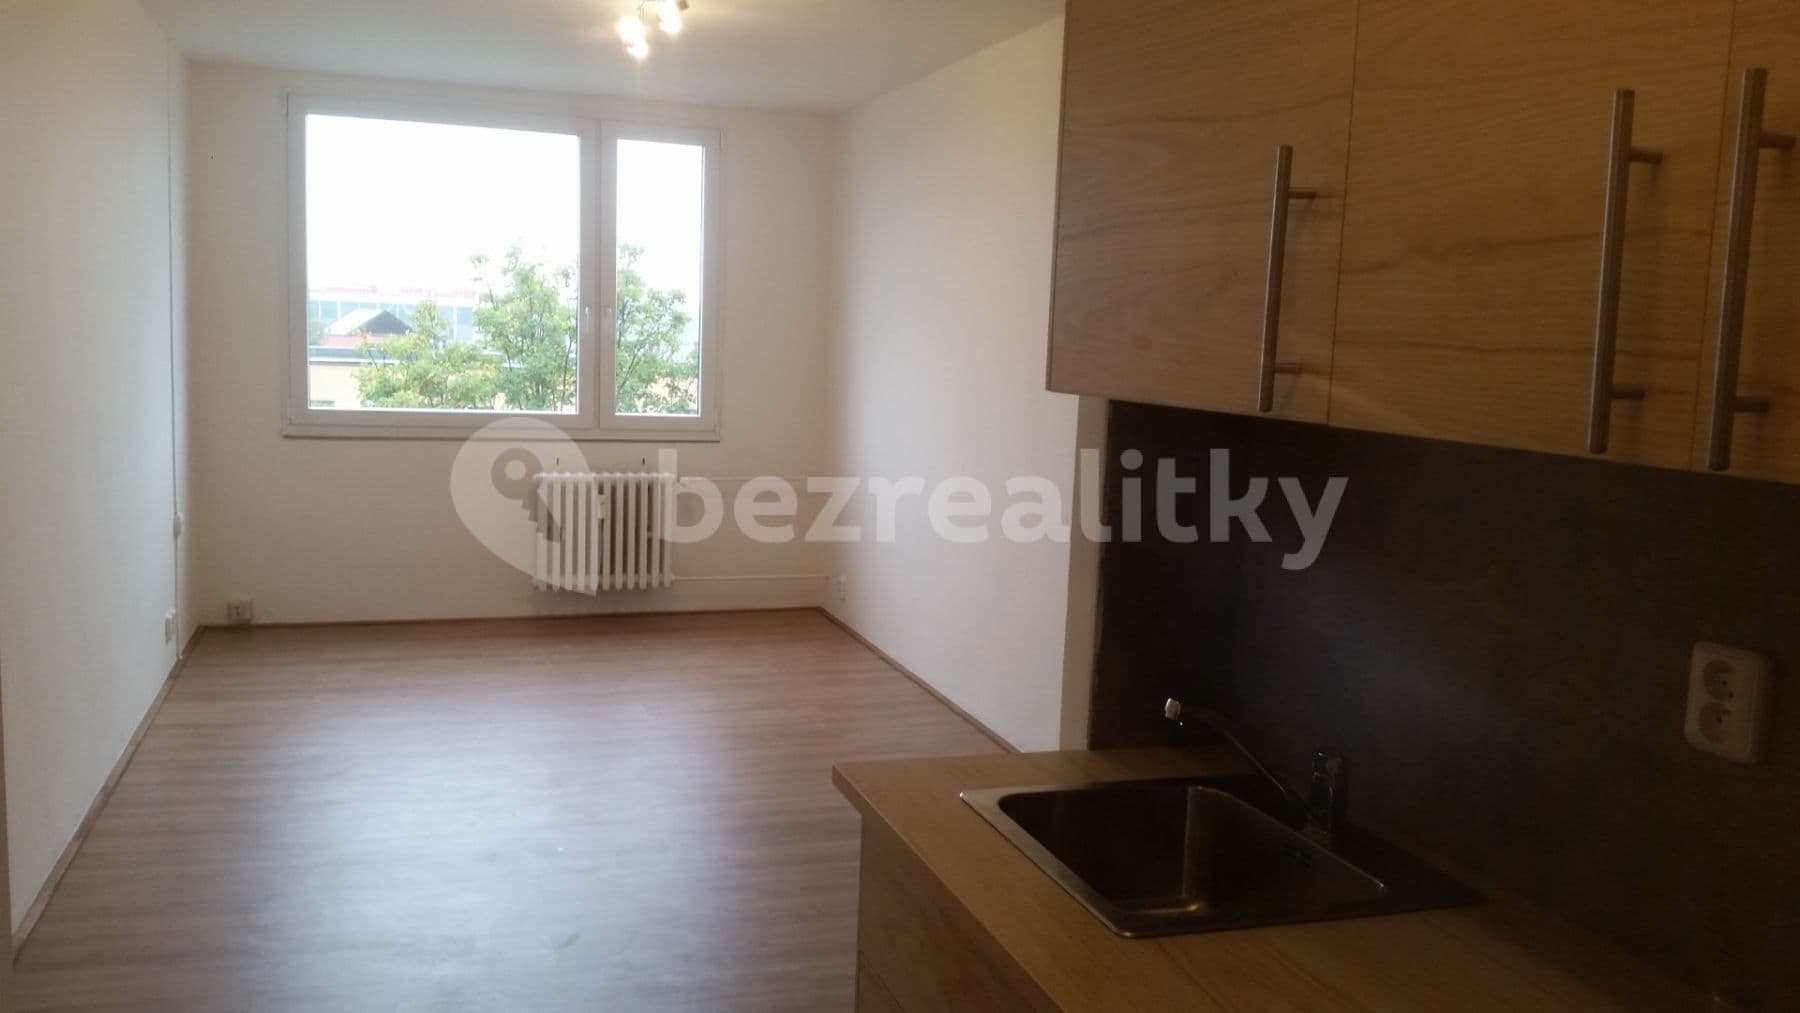 1 bedroom with open-plan kitchen flat to rent, 46 m², Štichova, Prague, Prague